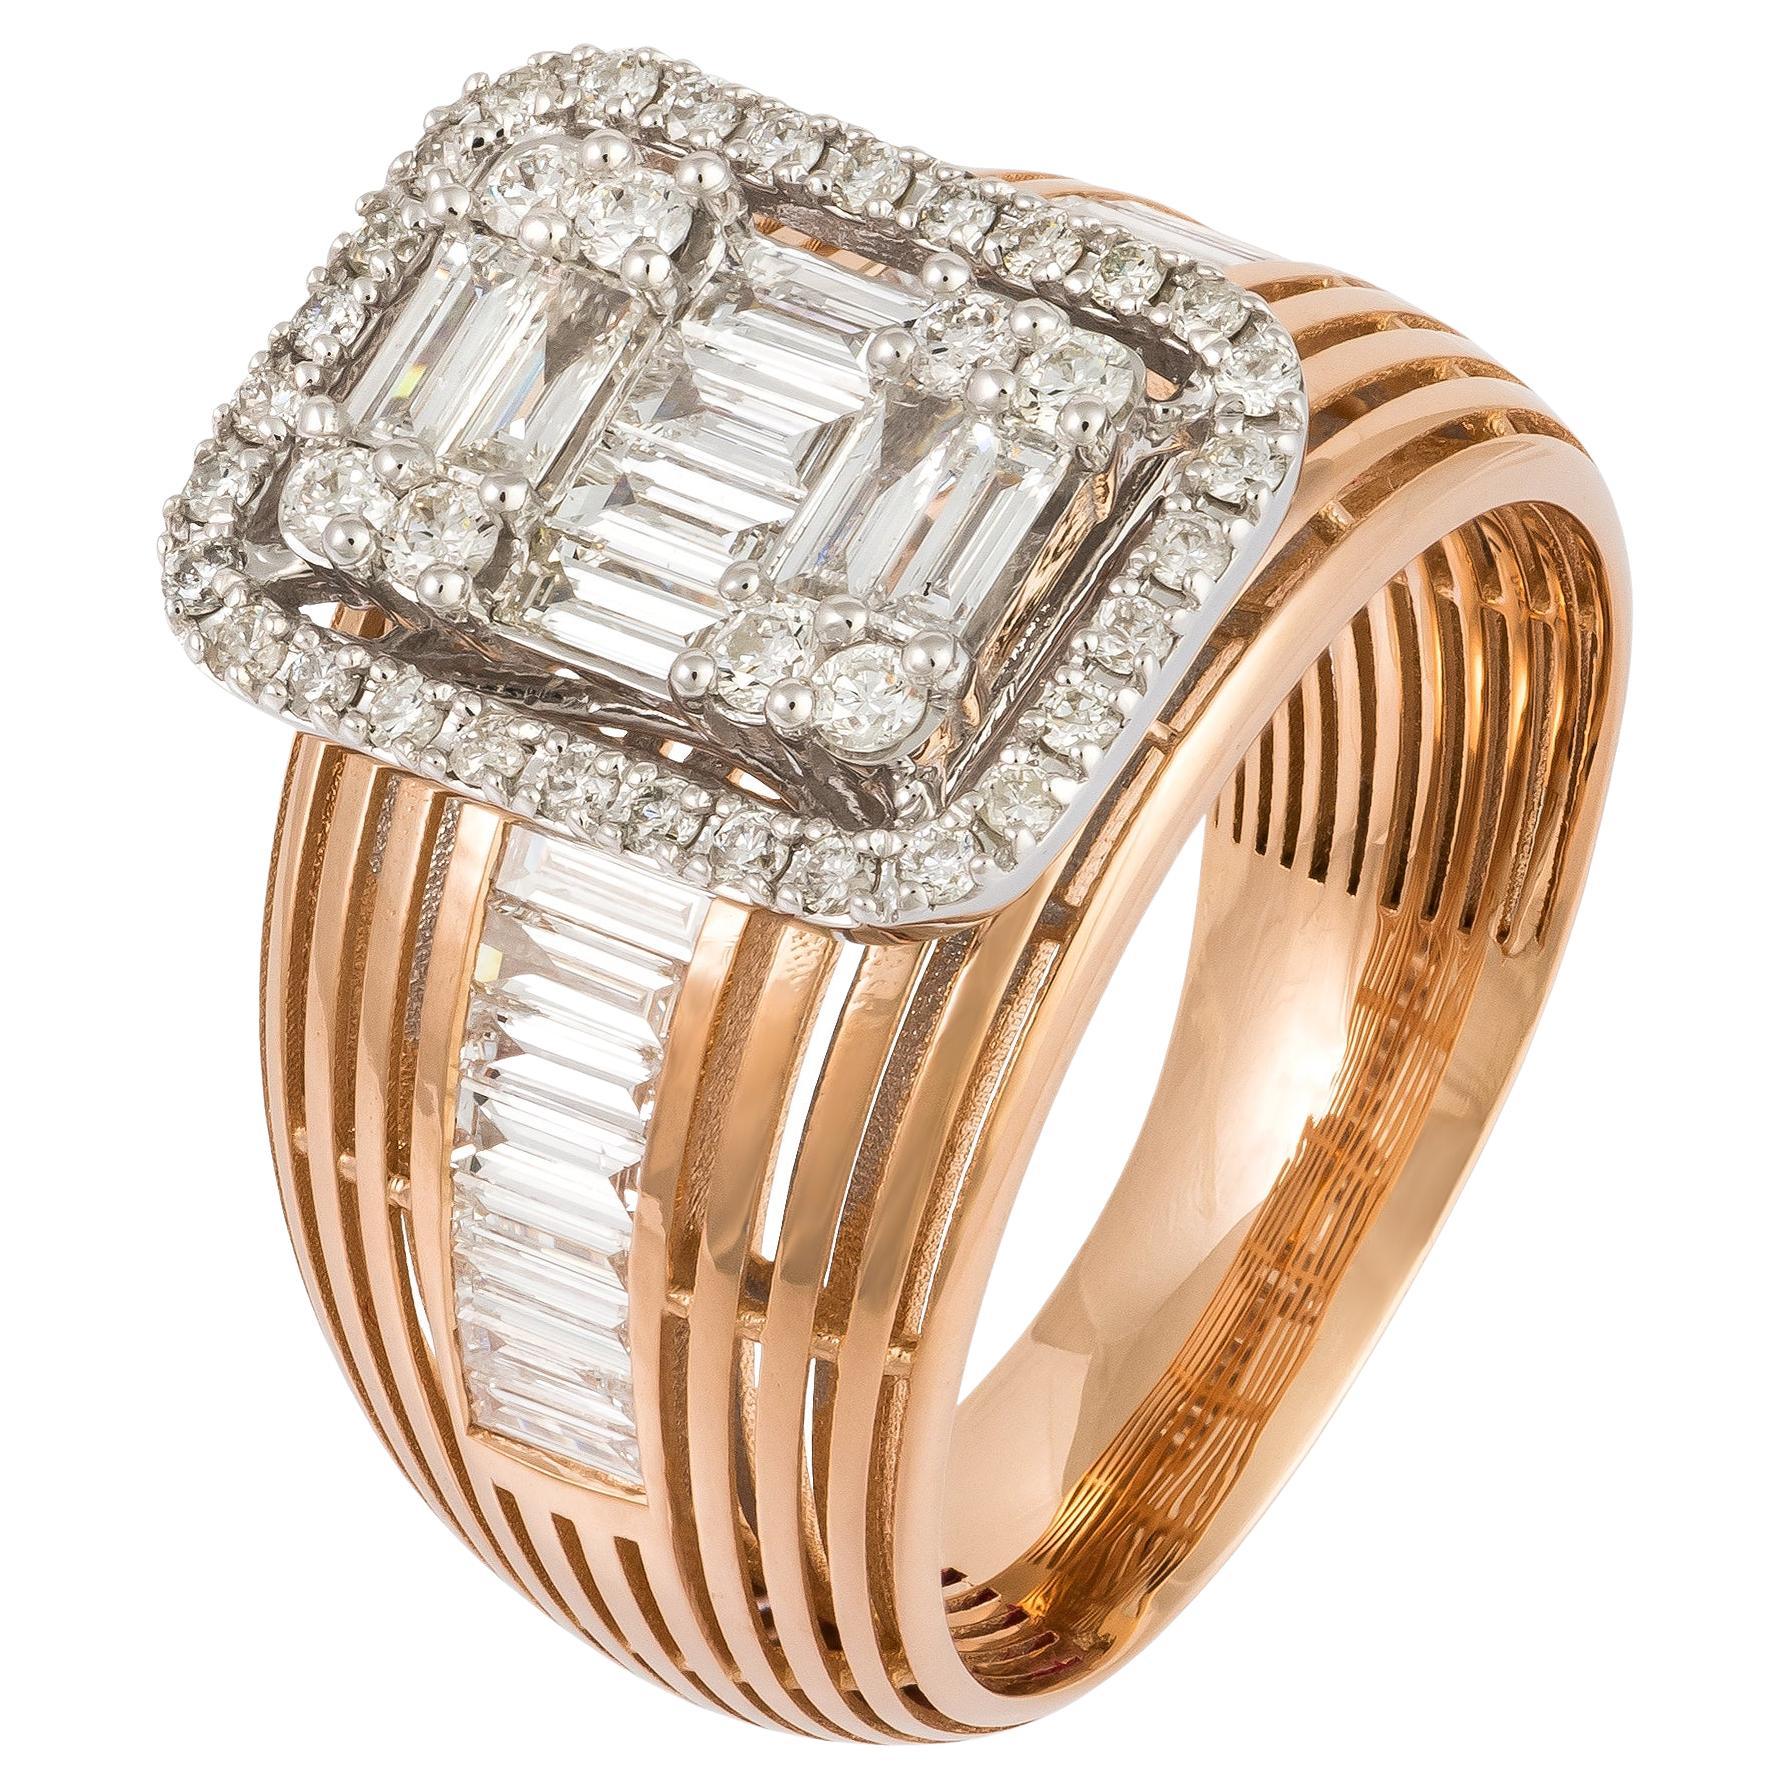 For Sale:  Monumental White Pink 18K Gold White Diamond Ring for Her